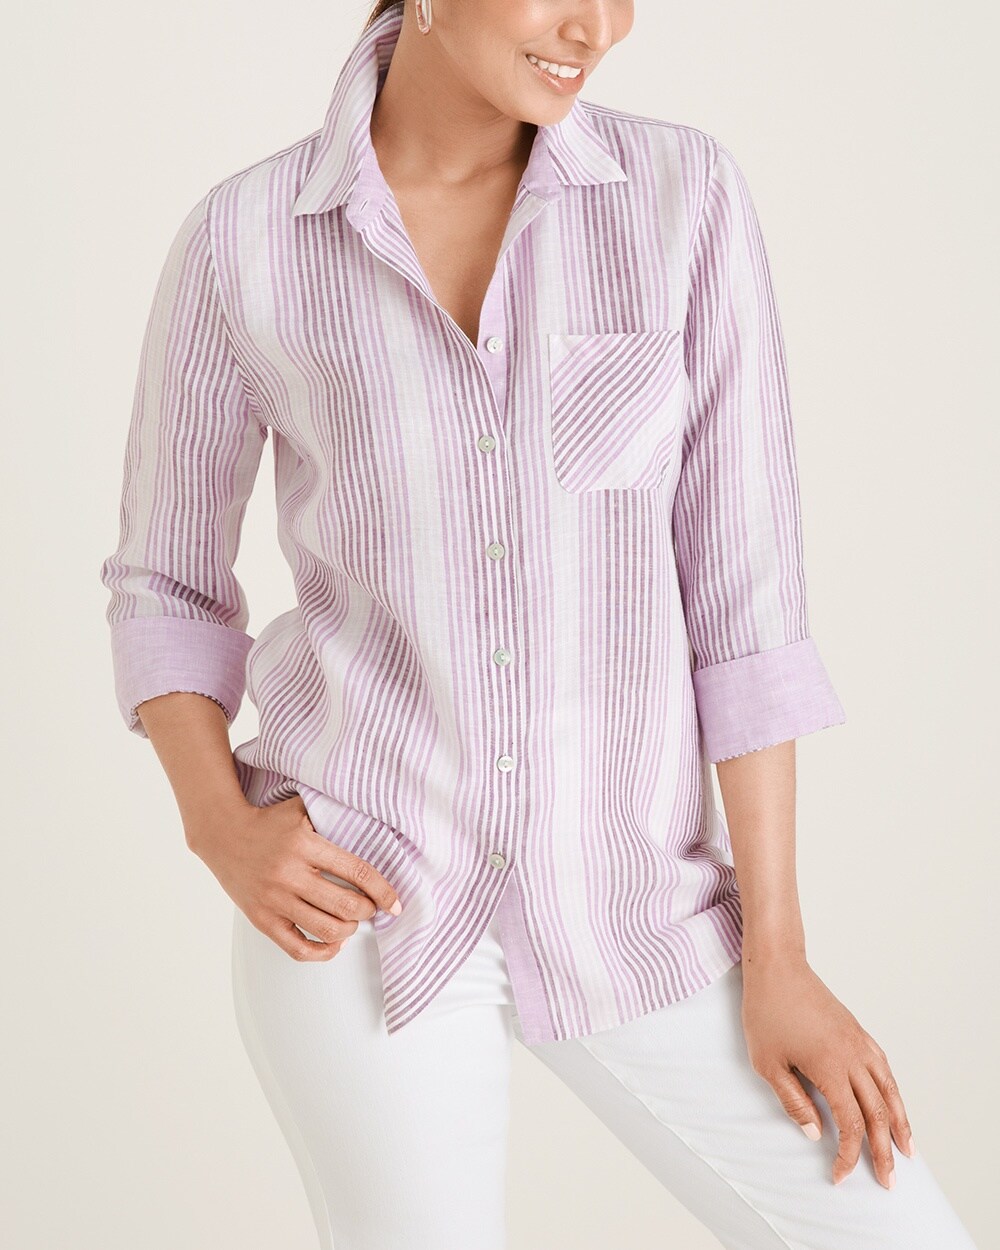 No-Iron FreshChic Purple Striped Linen Shirt